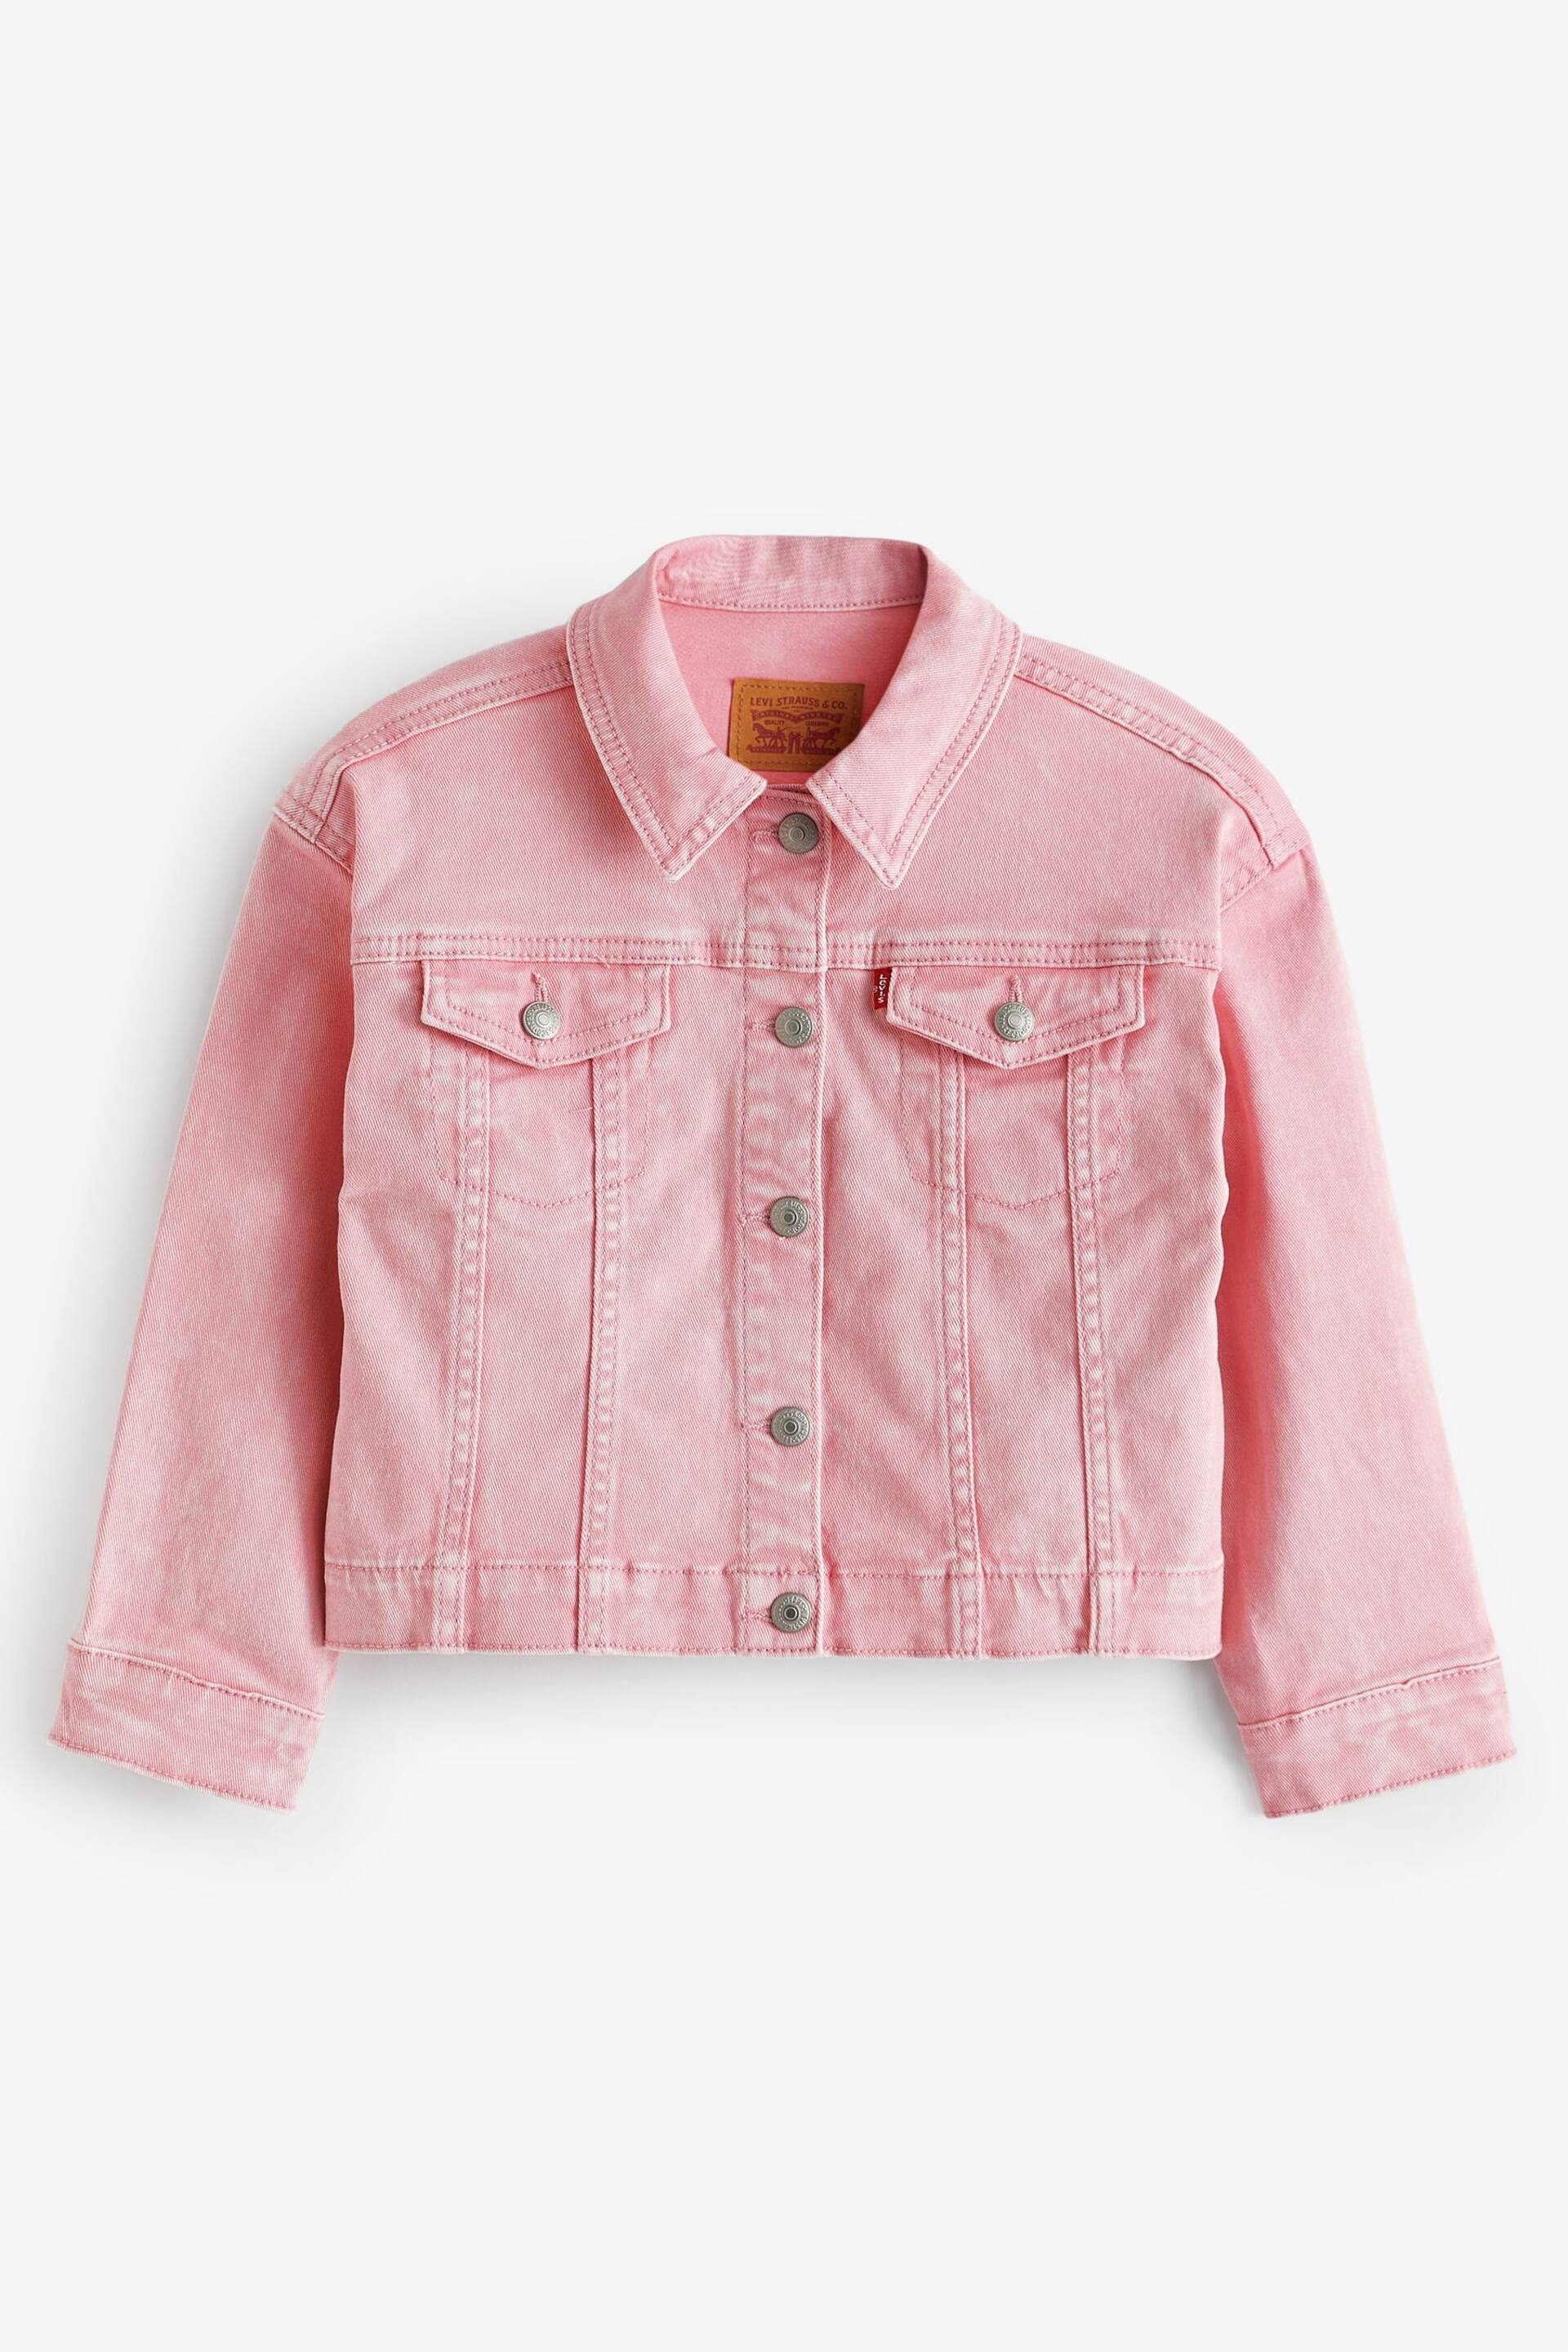 Levi's® Pink Cropped Denim Trucker Jacket - Image 1 of 4